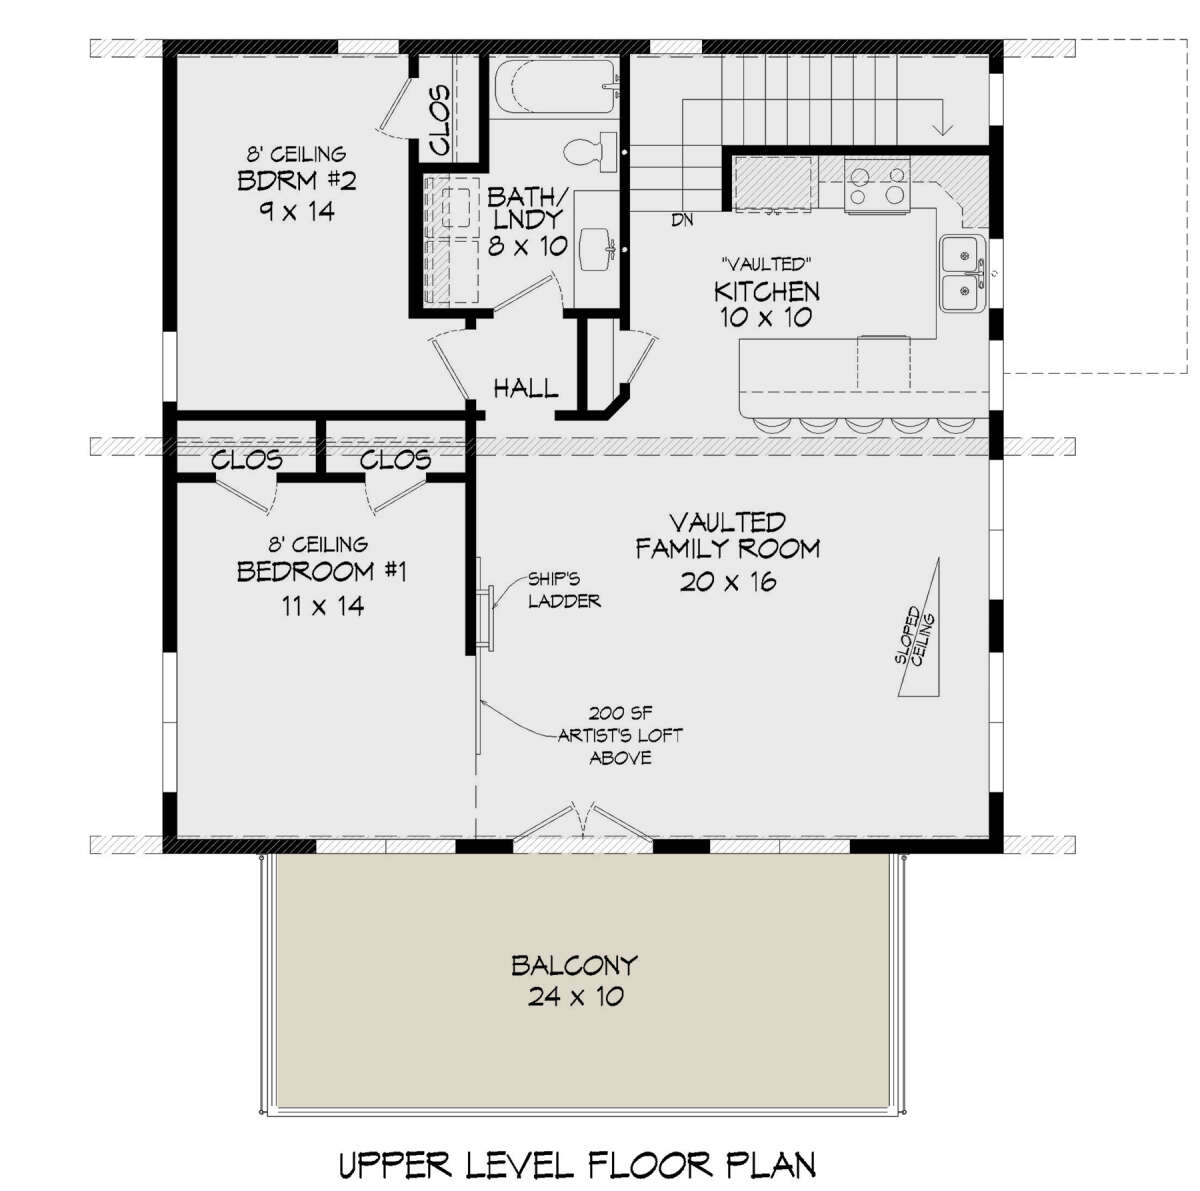 Modern Plan: 1,559 Square Feet, 3 Bedrooms, 2 Bathrooms - 940-00234